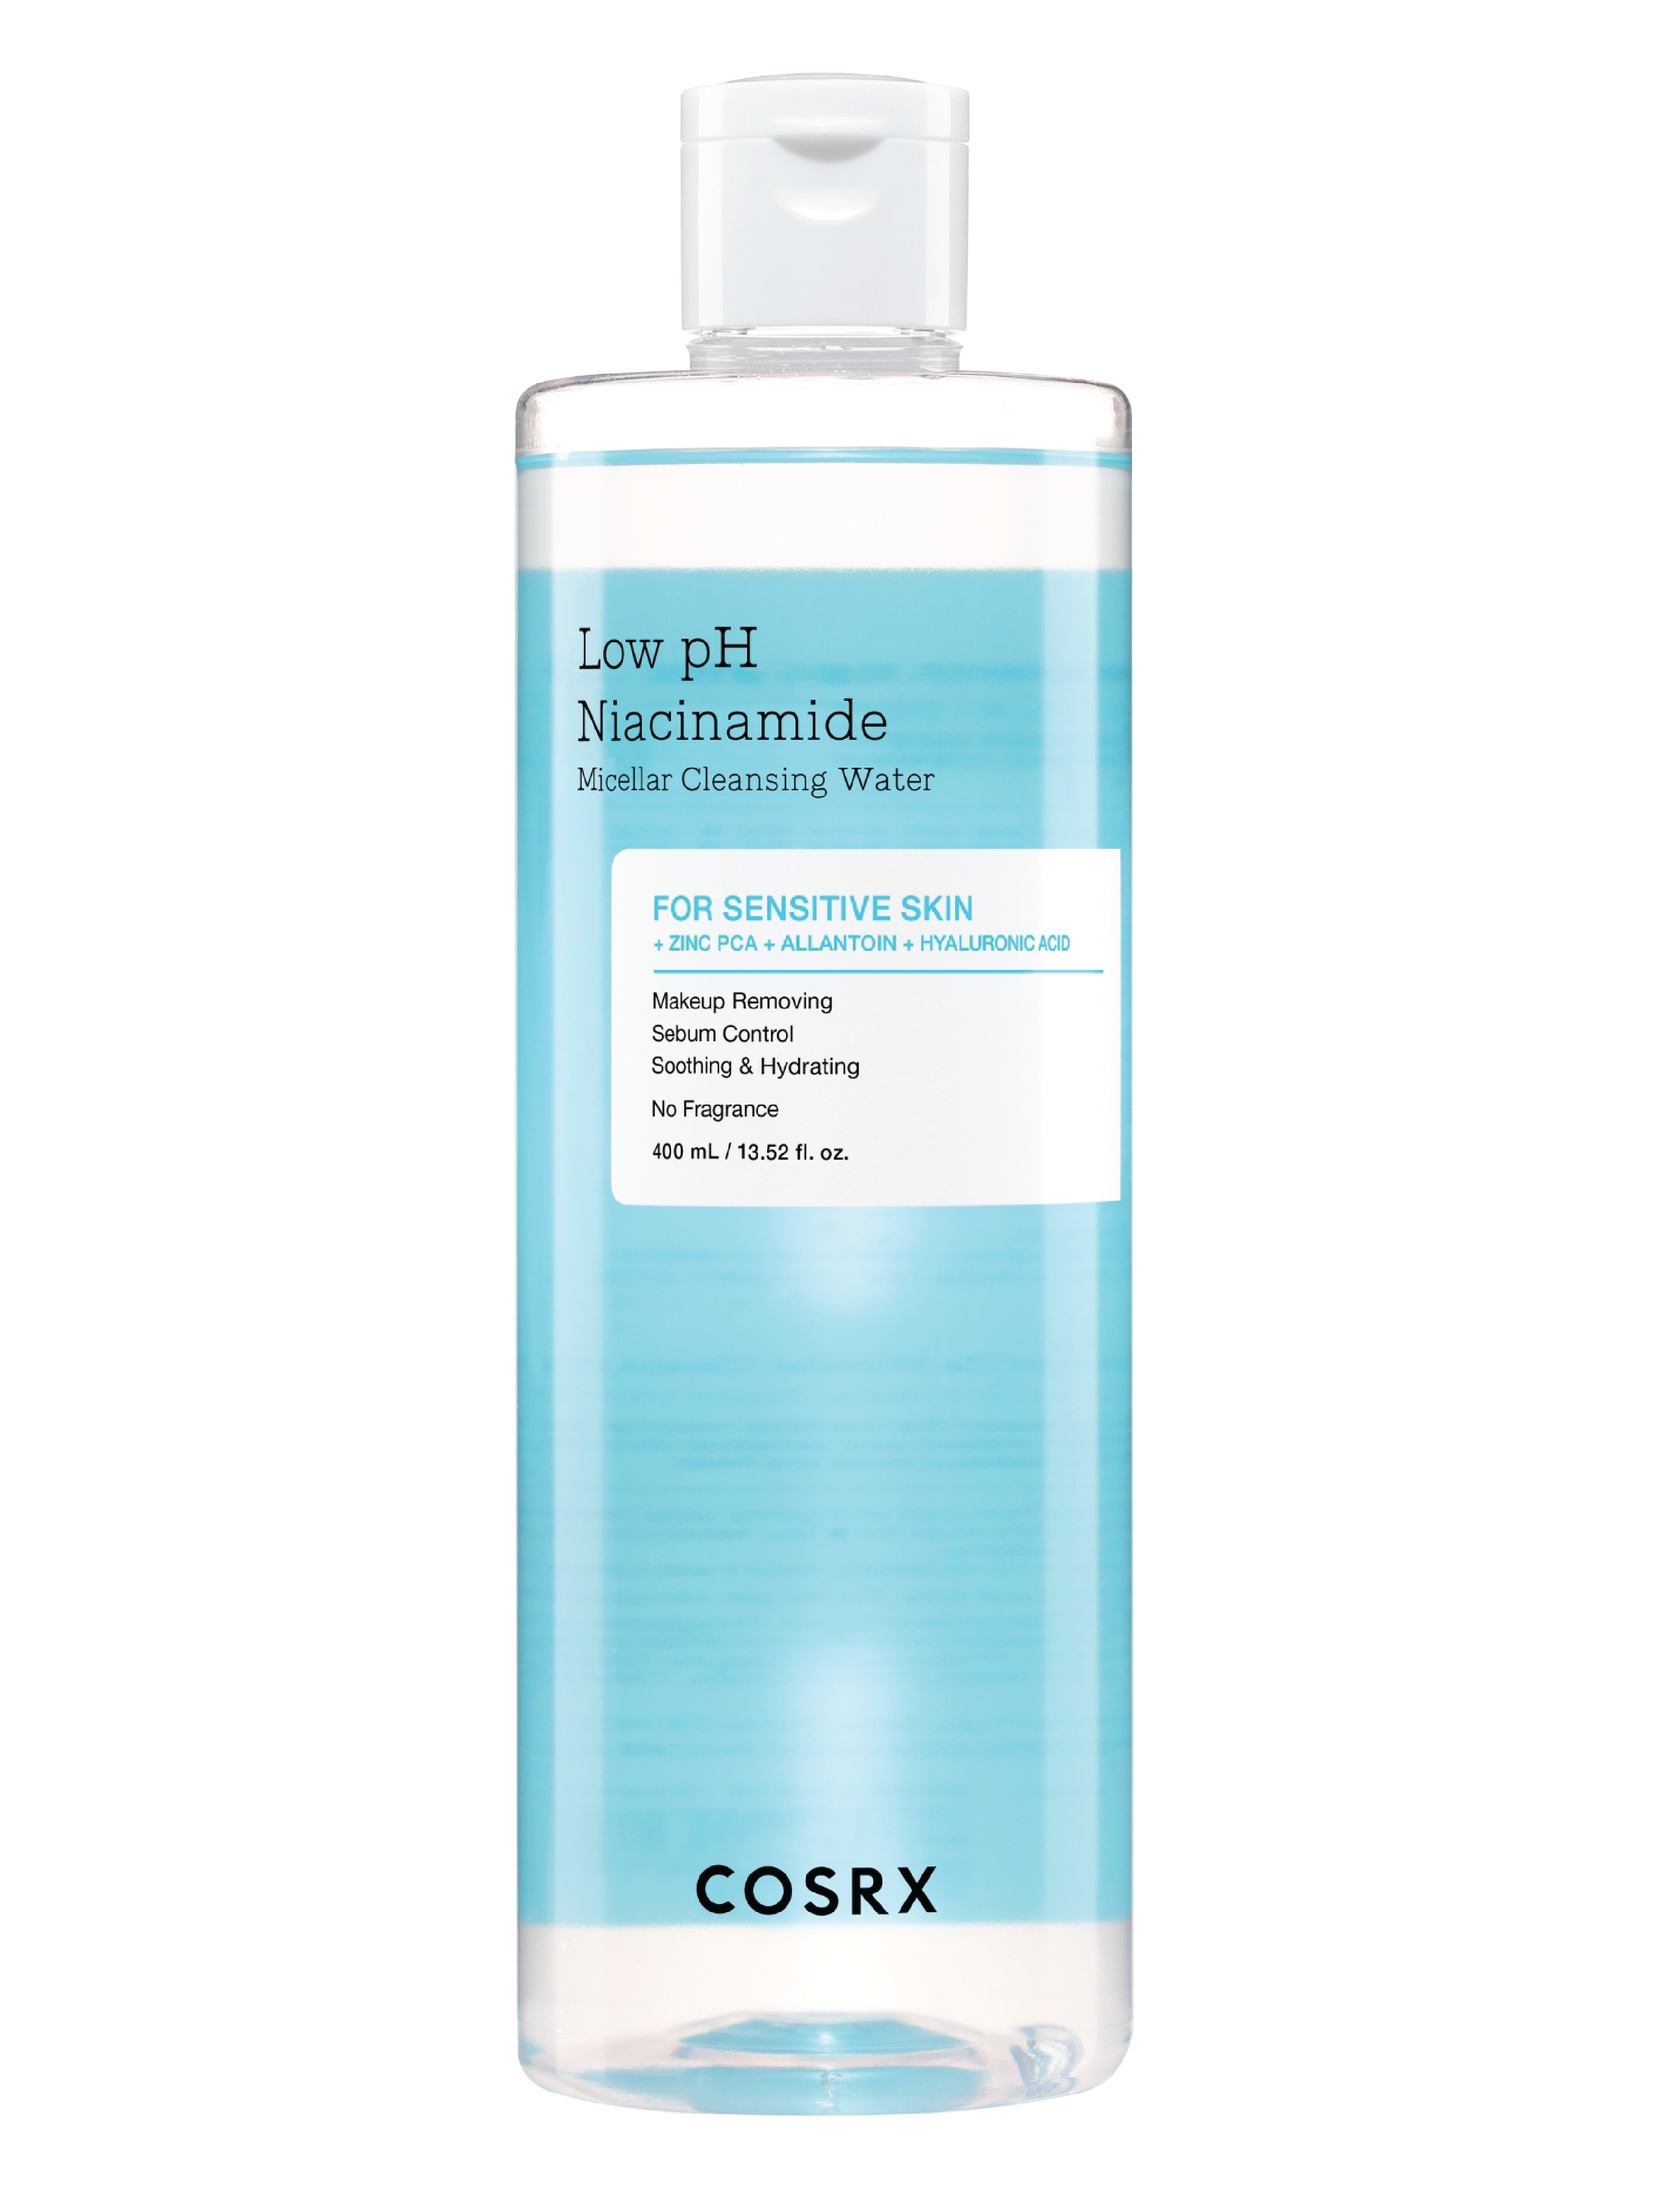 COSRX Low pH Niacinamide Micellar Cleansing Water, 400 ml